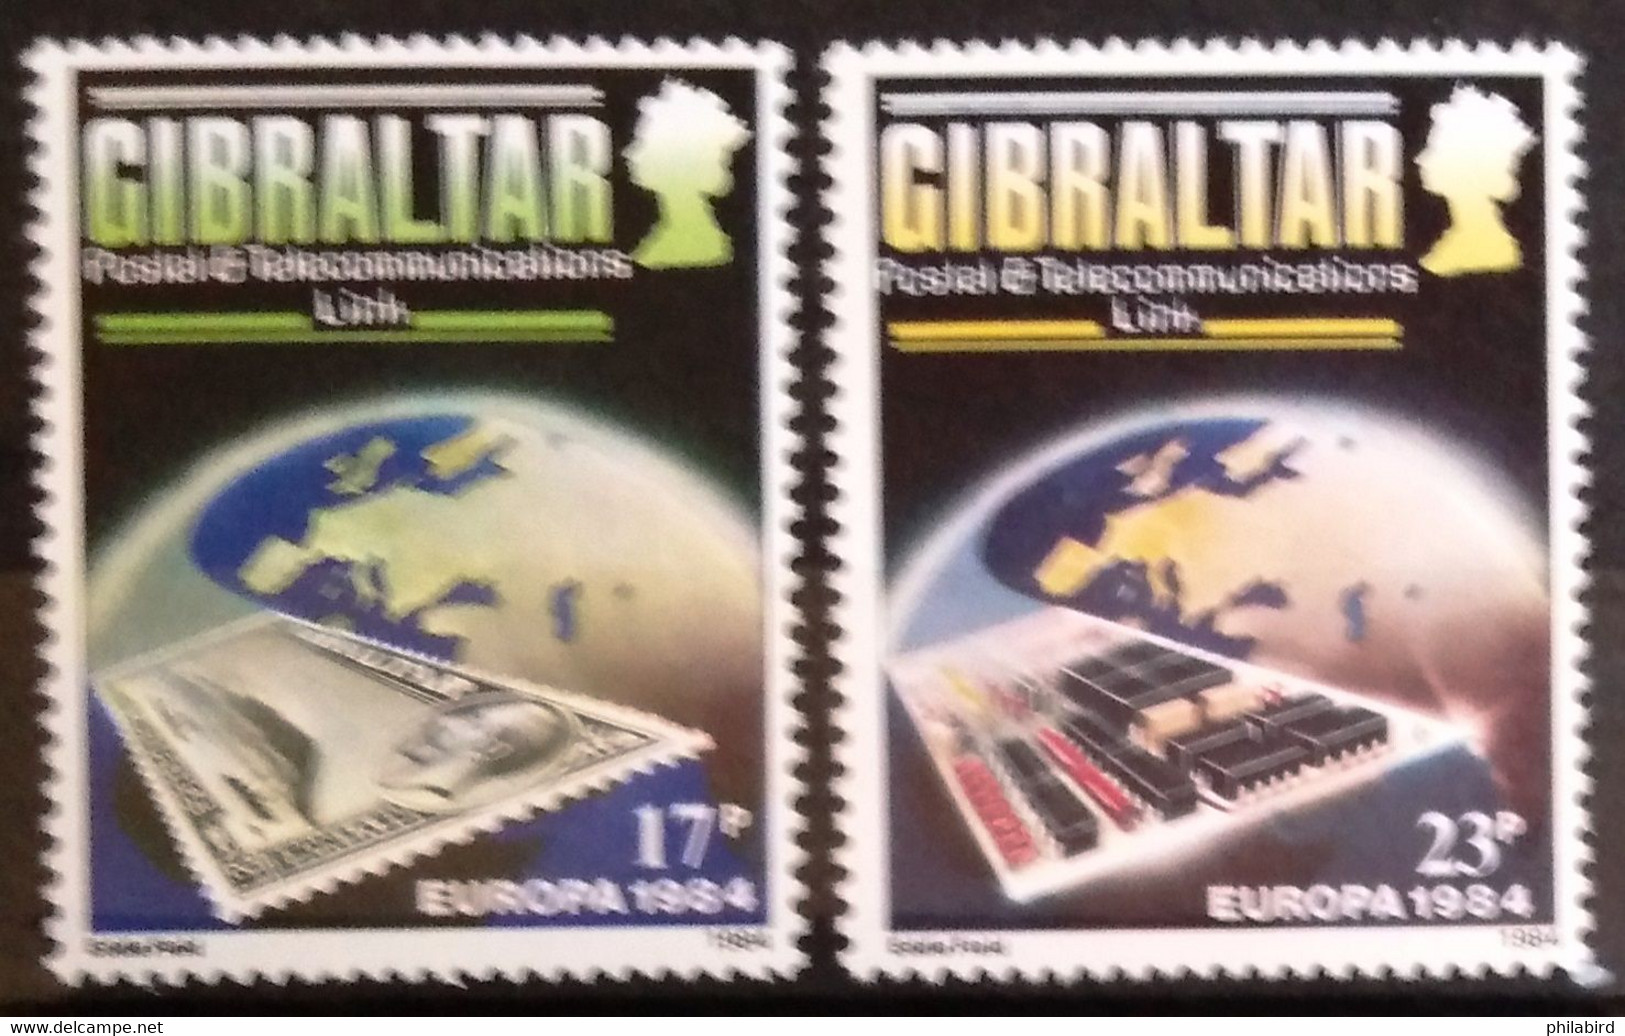 EUROPA 1984 - GIBRALTAR                 N° 1418/1419                        NEUF* - 1984